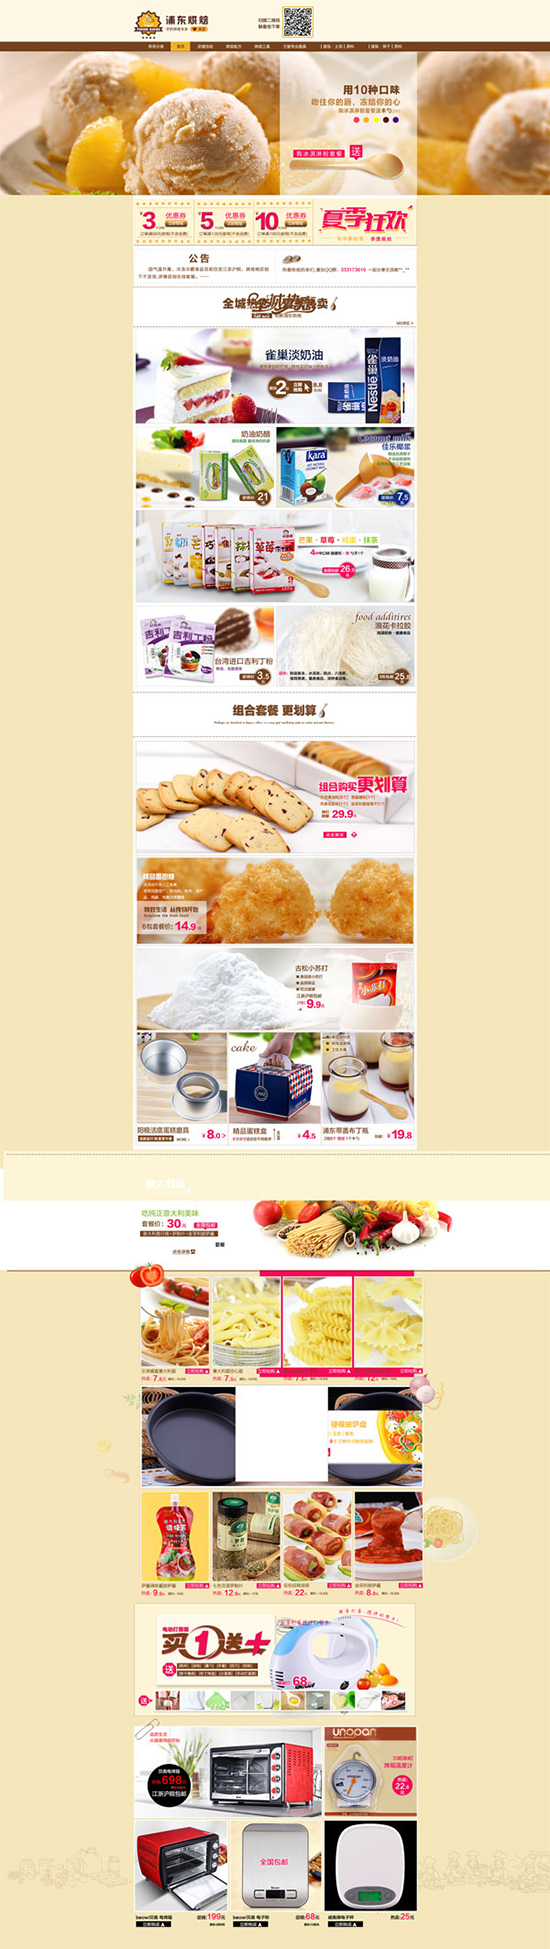 Pudong Baking Website Home Psd Template